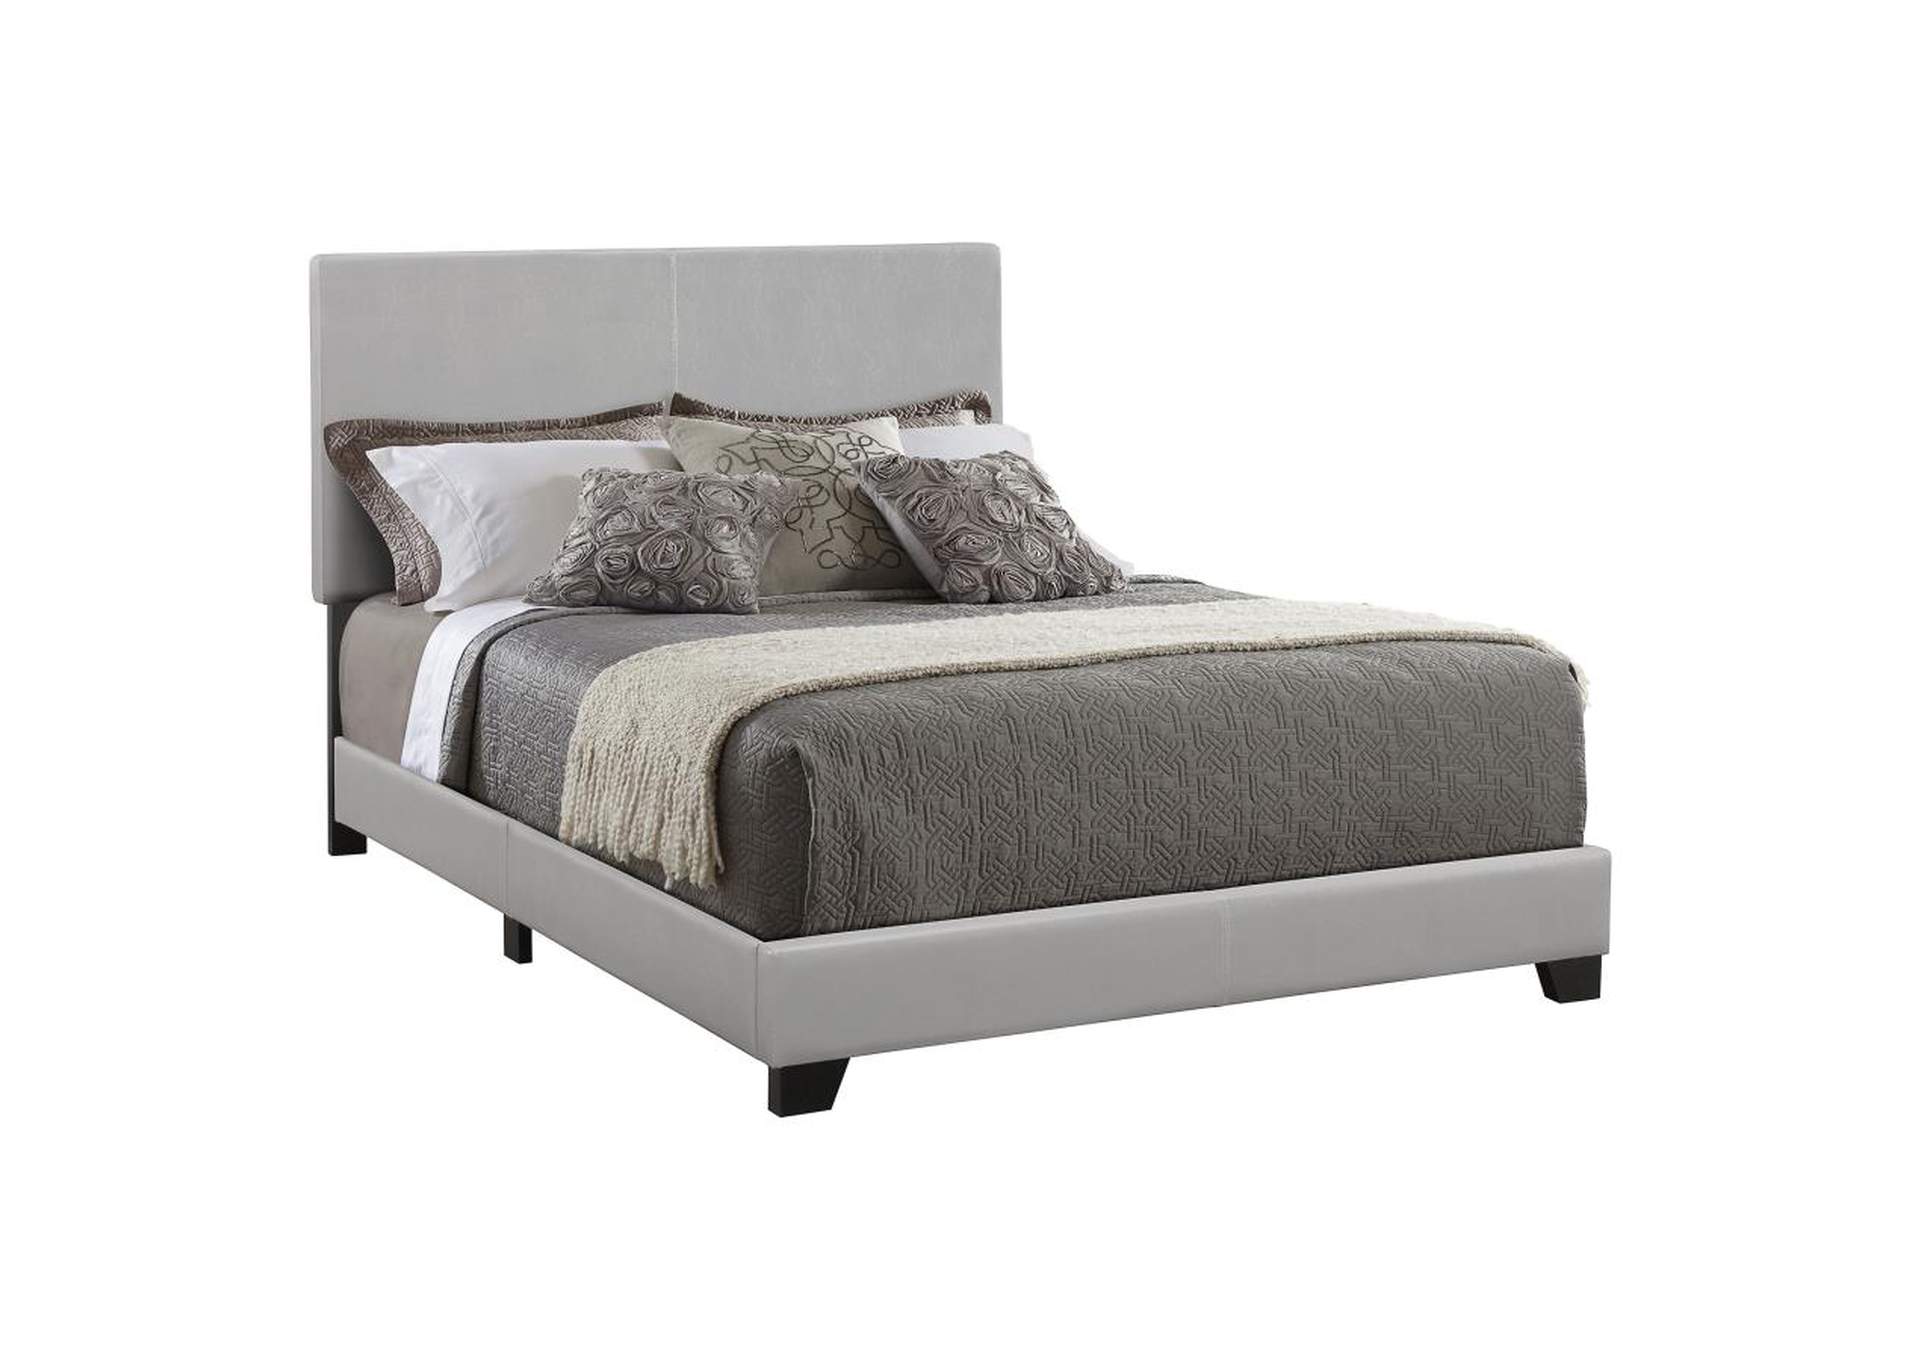 Dorian Upholstered Full Bed Grey,Coaster Furniture